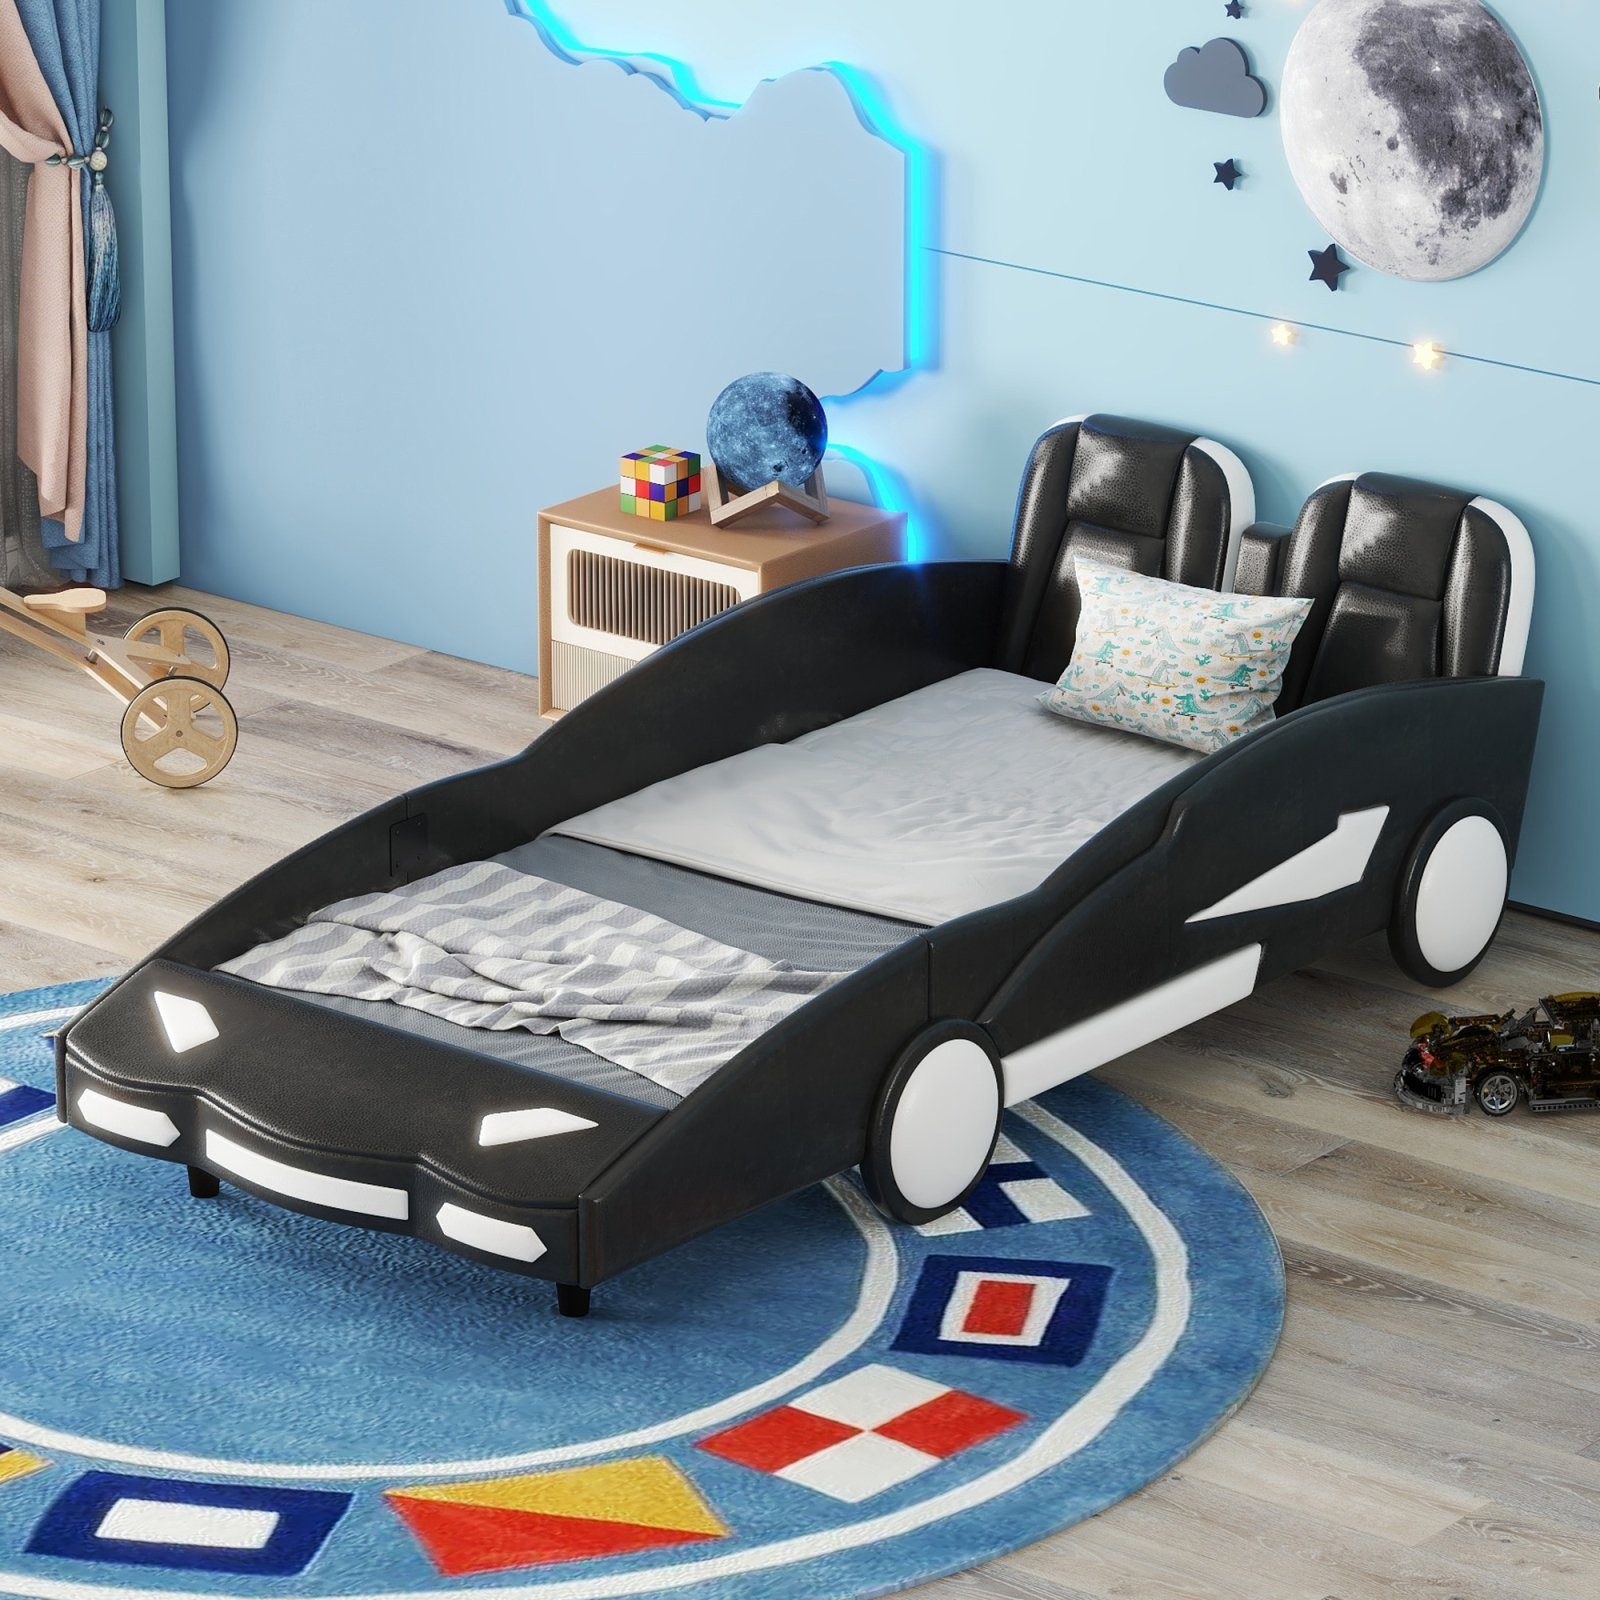 Autobett Dream Racer Kinderbett im Rennwagen-Design mit Lattenrost